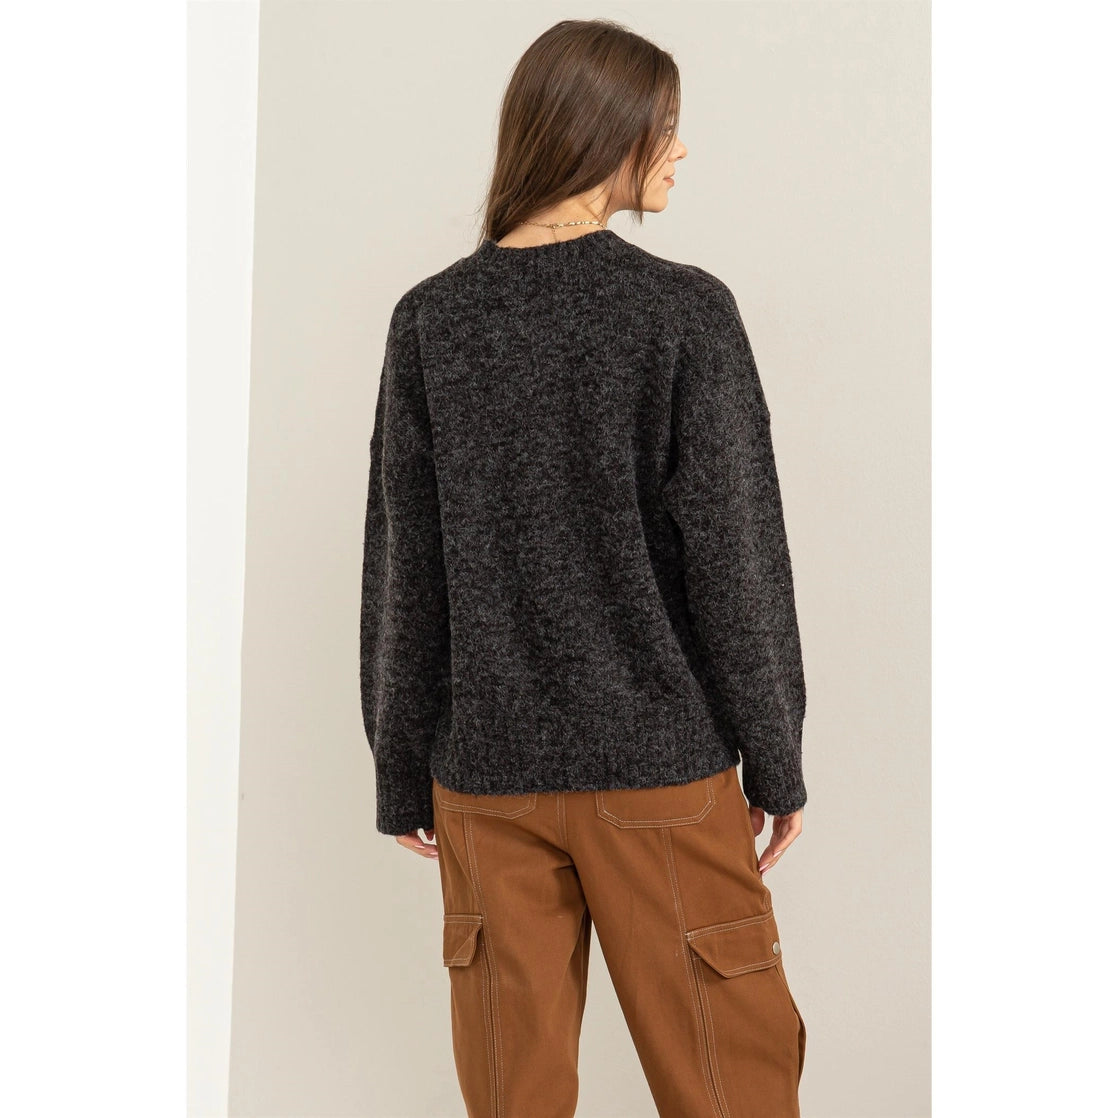 Style Game Drop Shoulder Sweater- Black